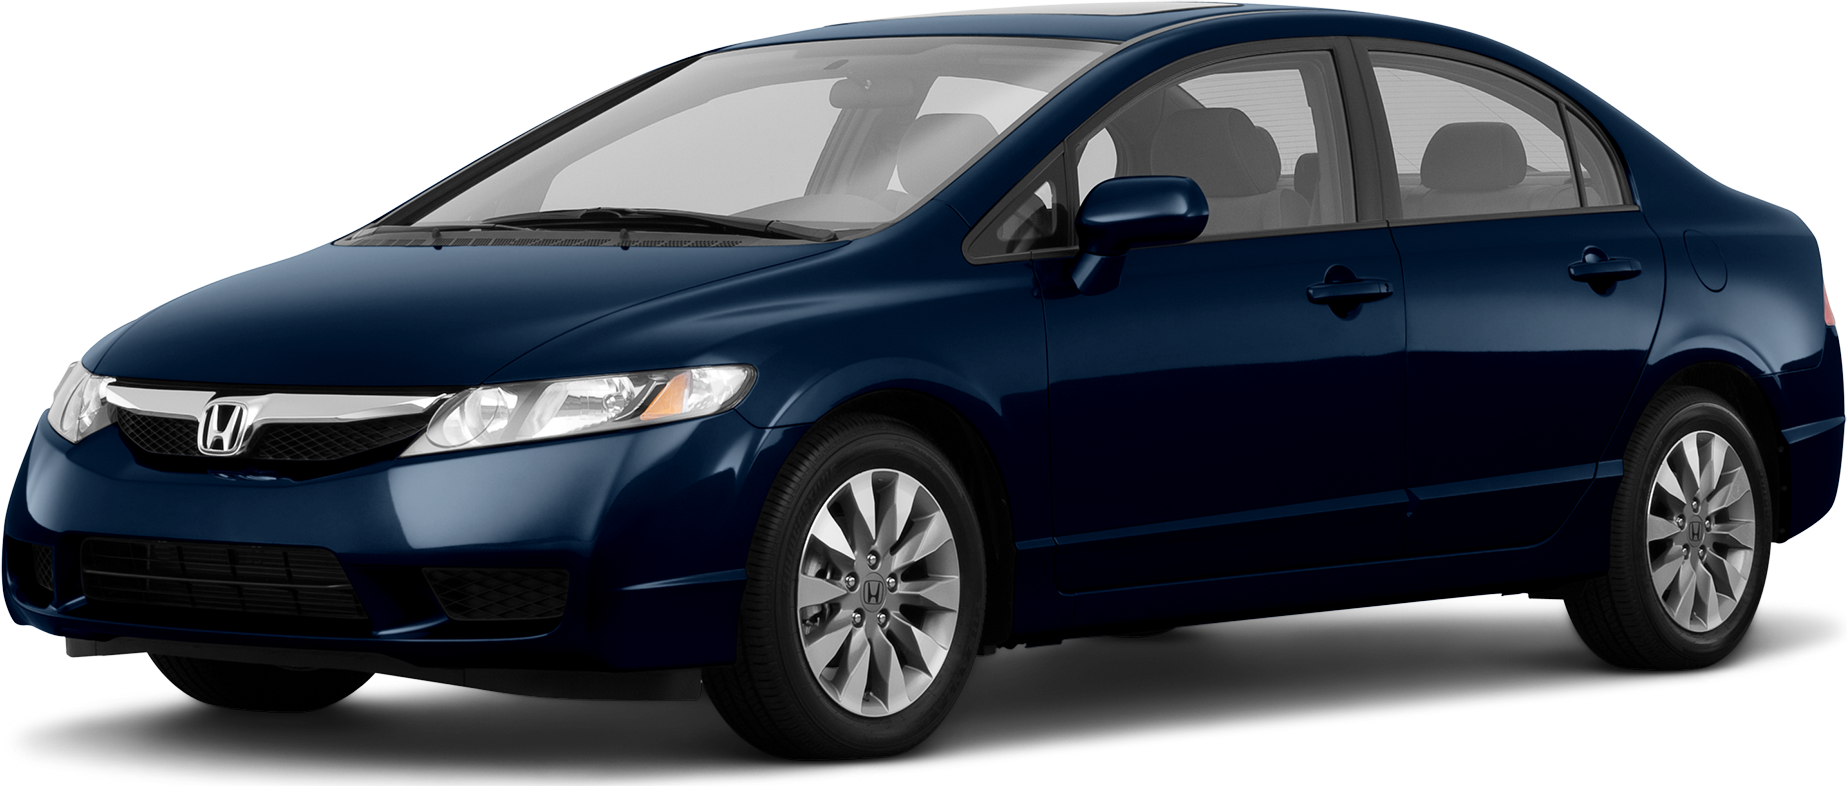 2011 Honda Civic Values Cars For Sale Kelley Blue Book